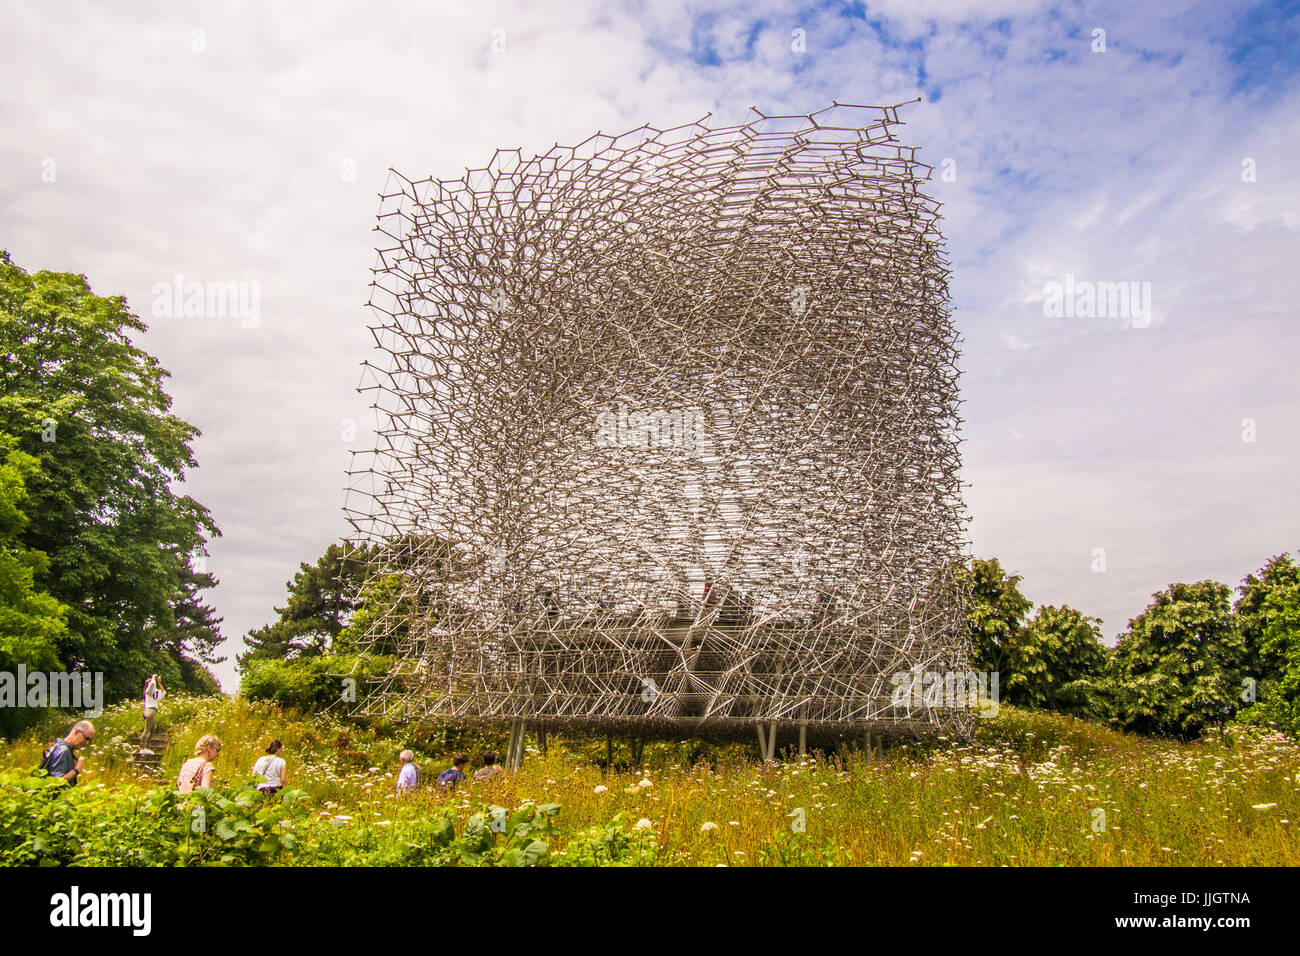 The Hive contemporary artwork at Kew Gardens, Richmond, London. Stock Photo